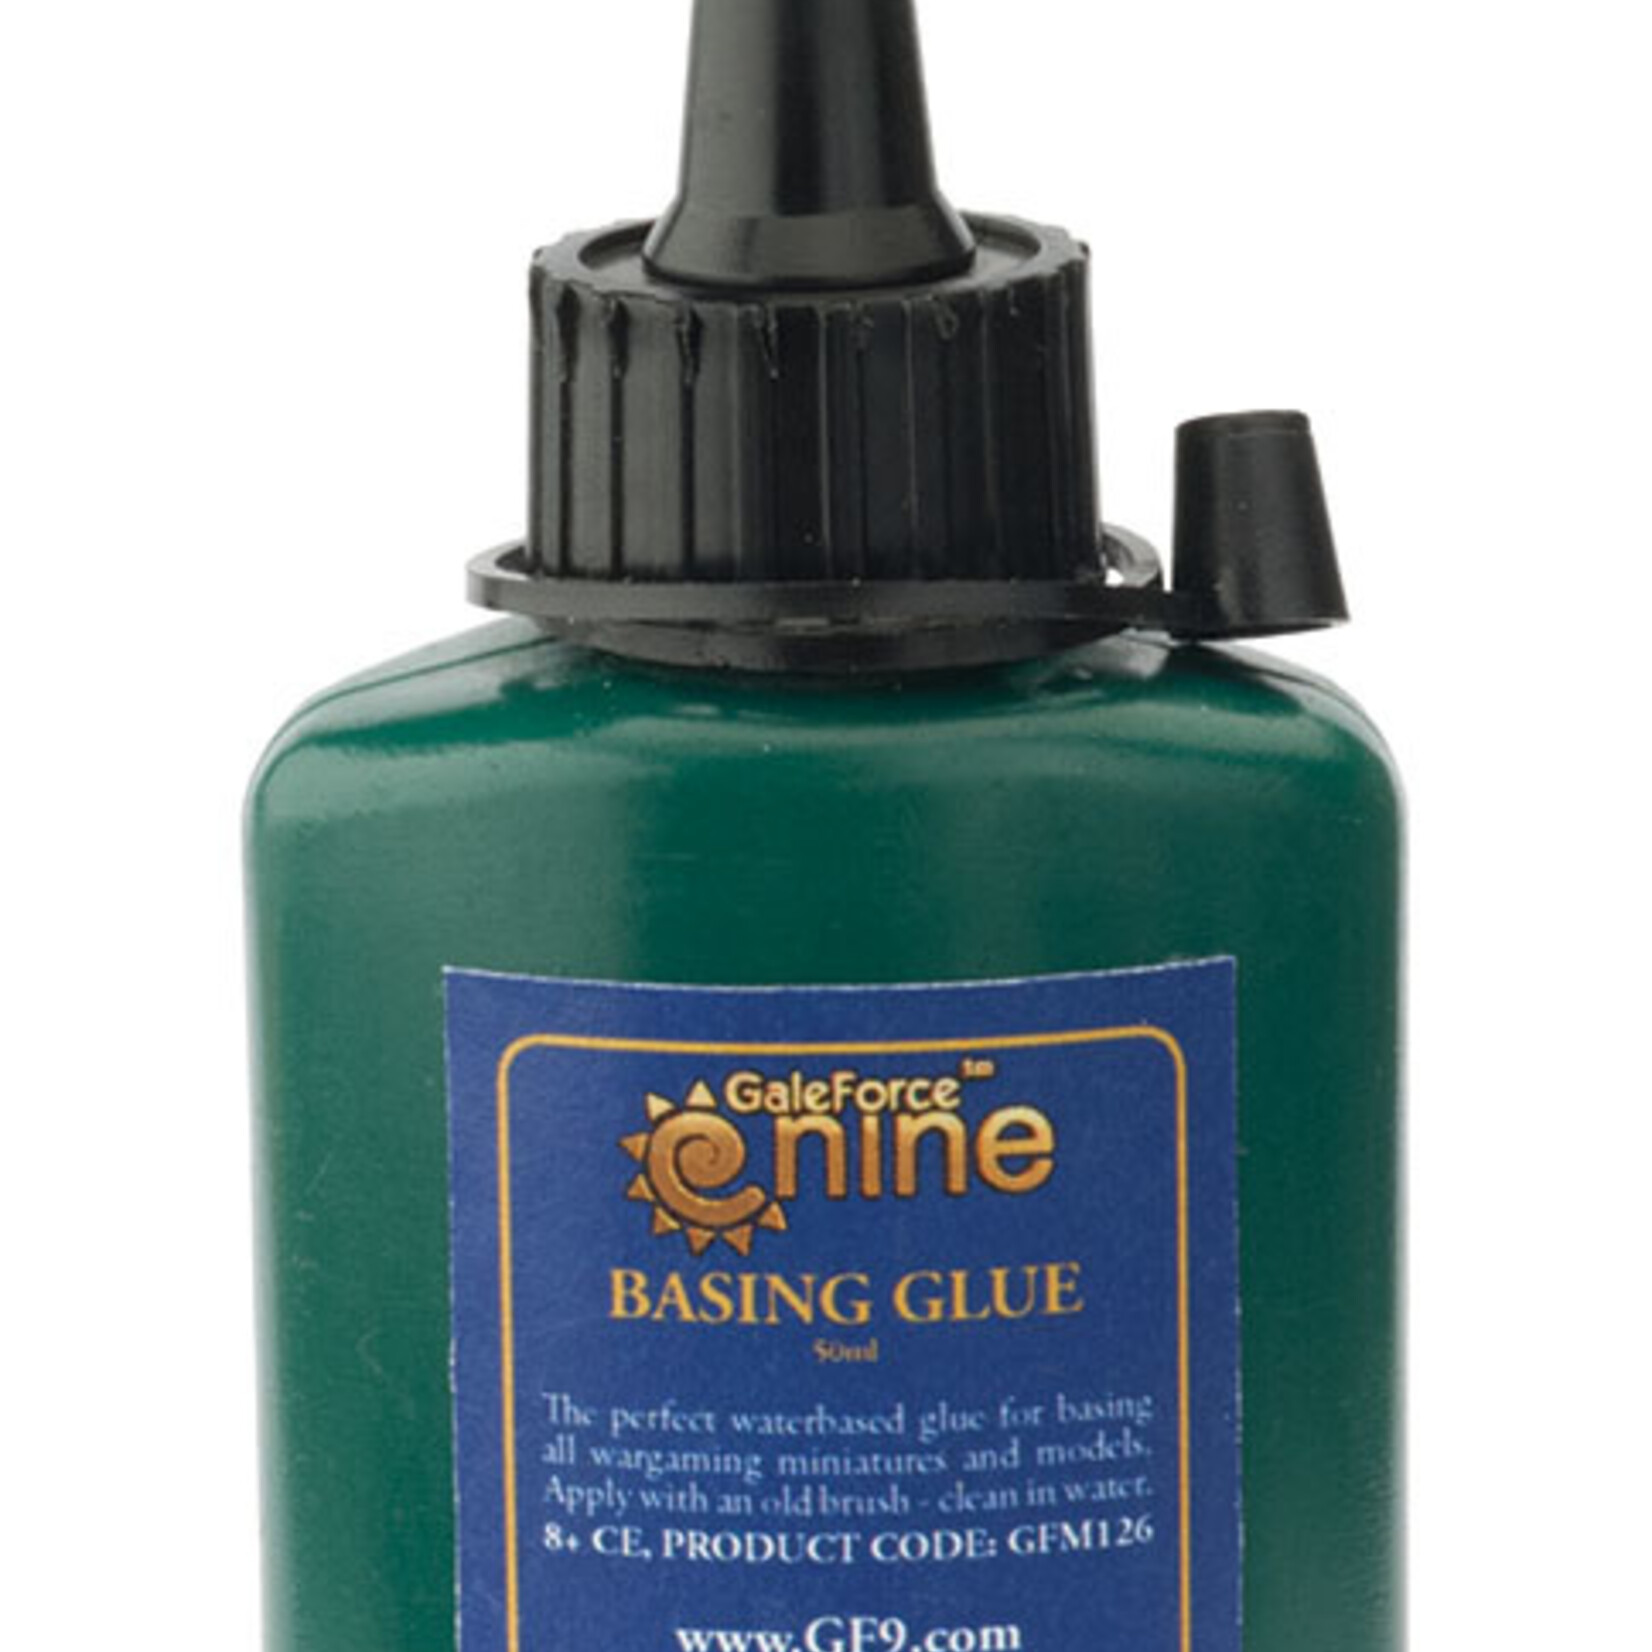 Gale Force 9 Basing Glue